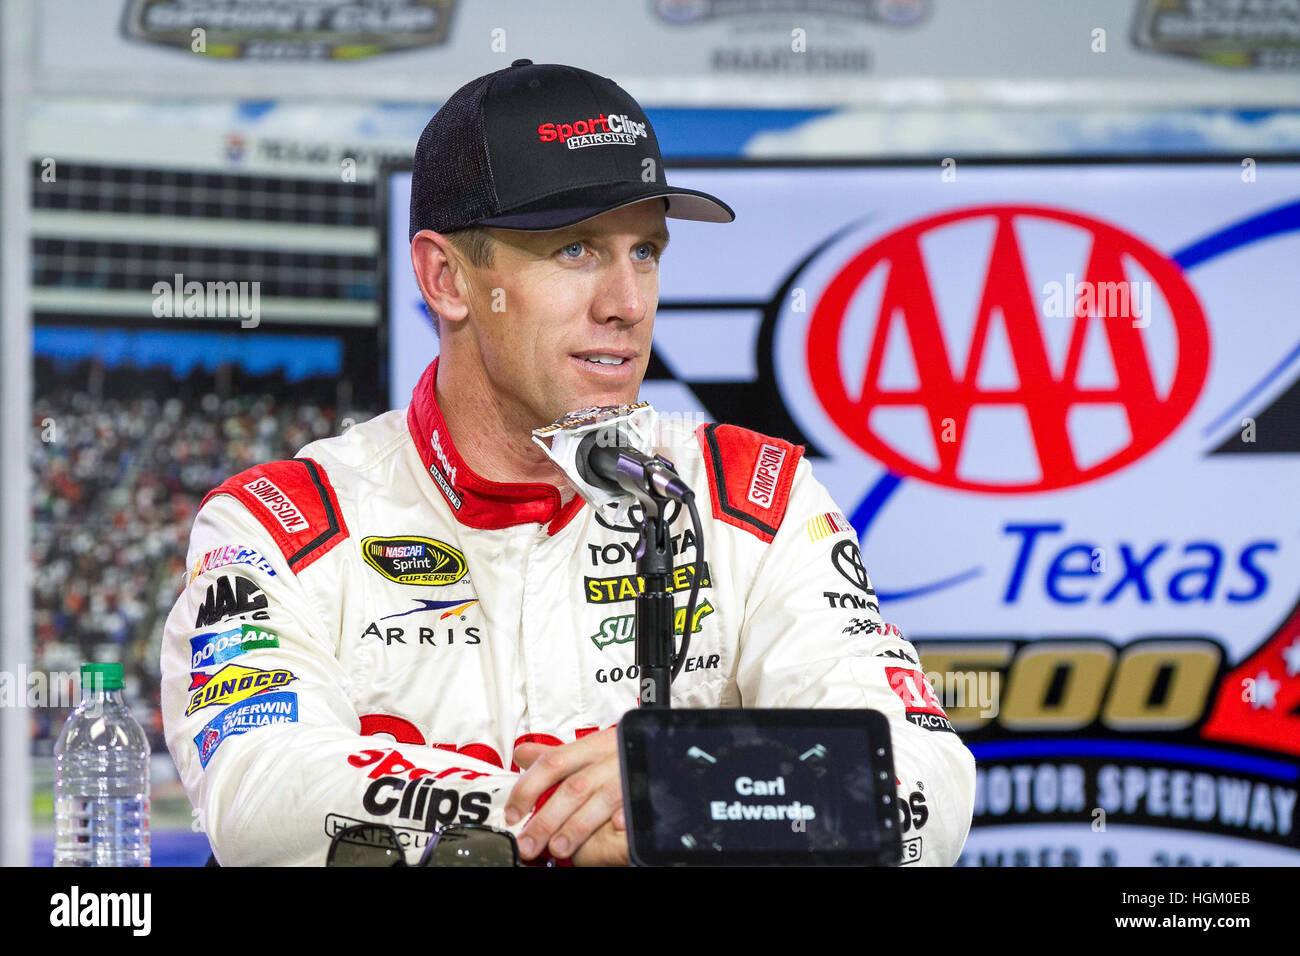 NASCAR-Fahrer Carl Edwards bei AAA Texas NASCAR-Rennen, Texas Motor Speedway am 6. November 2015 in Fort Worth, Texas. Stockfoto